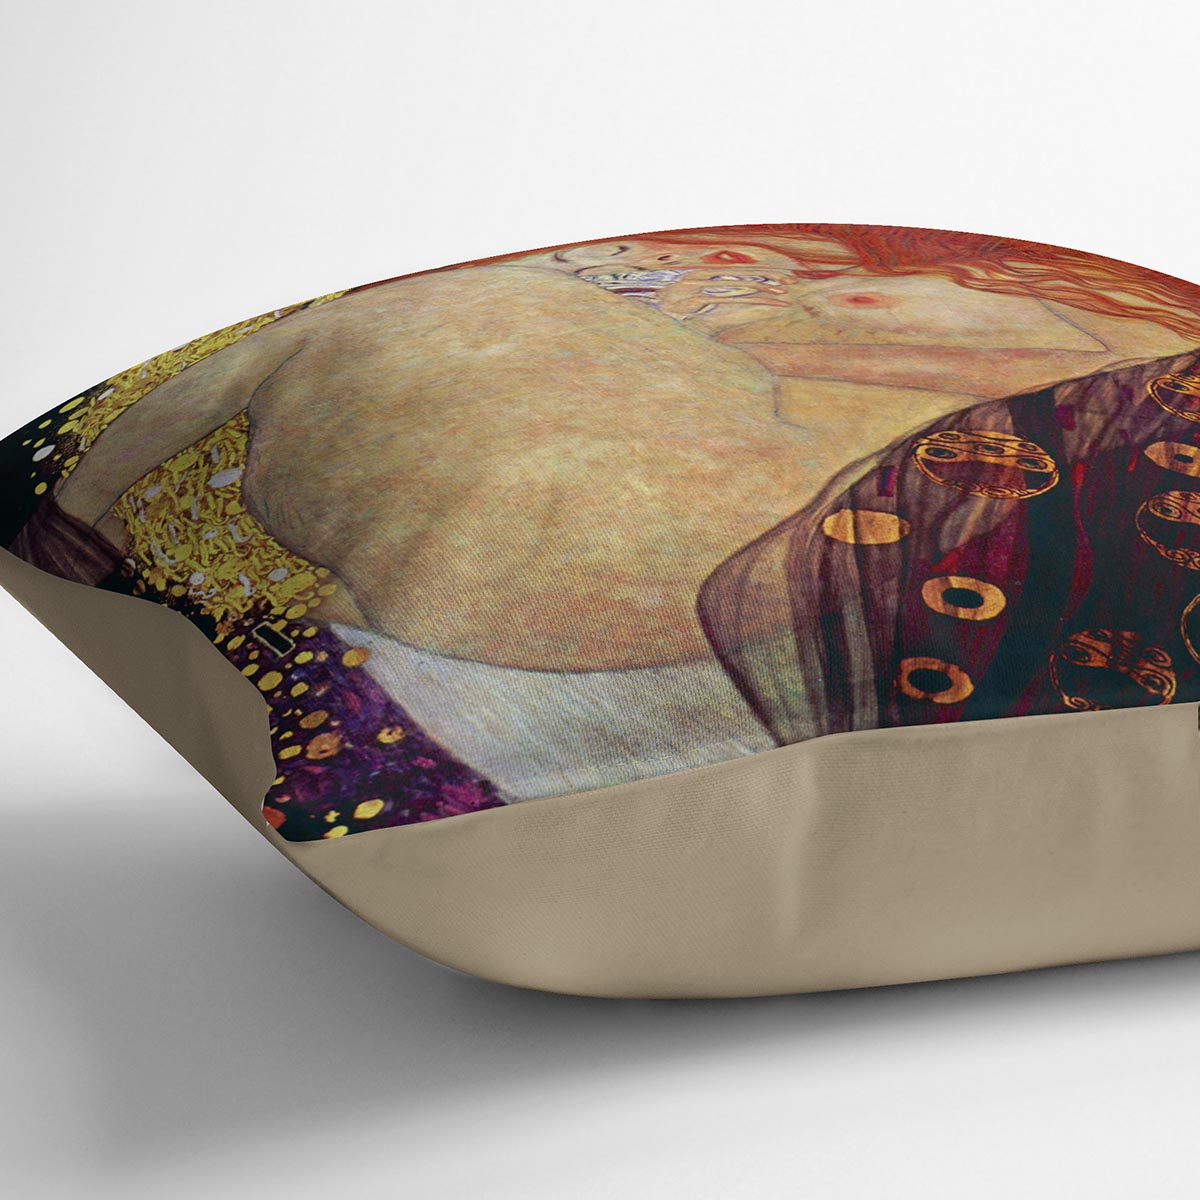 Danae by Klimt Cushion